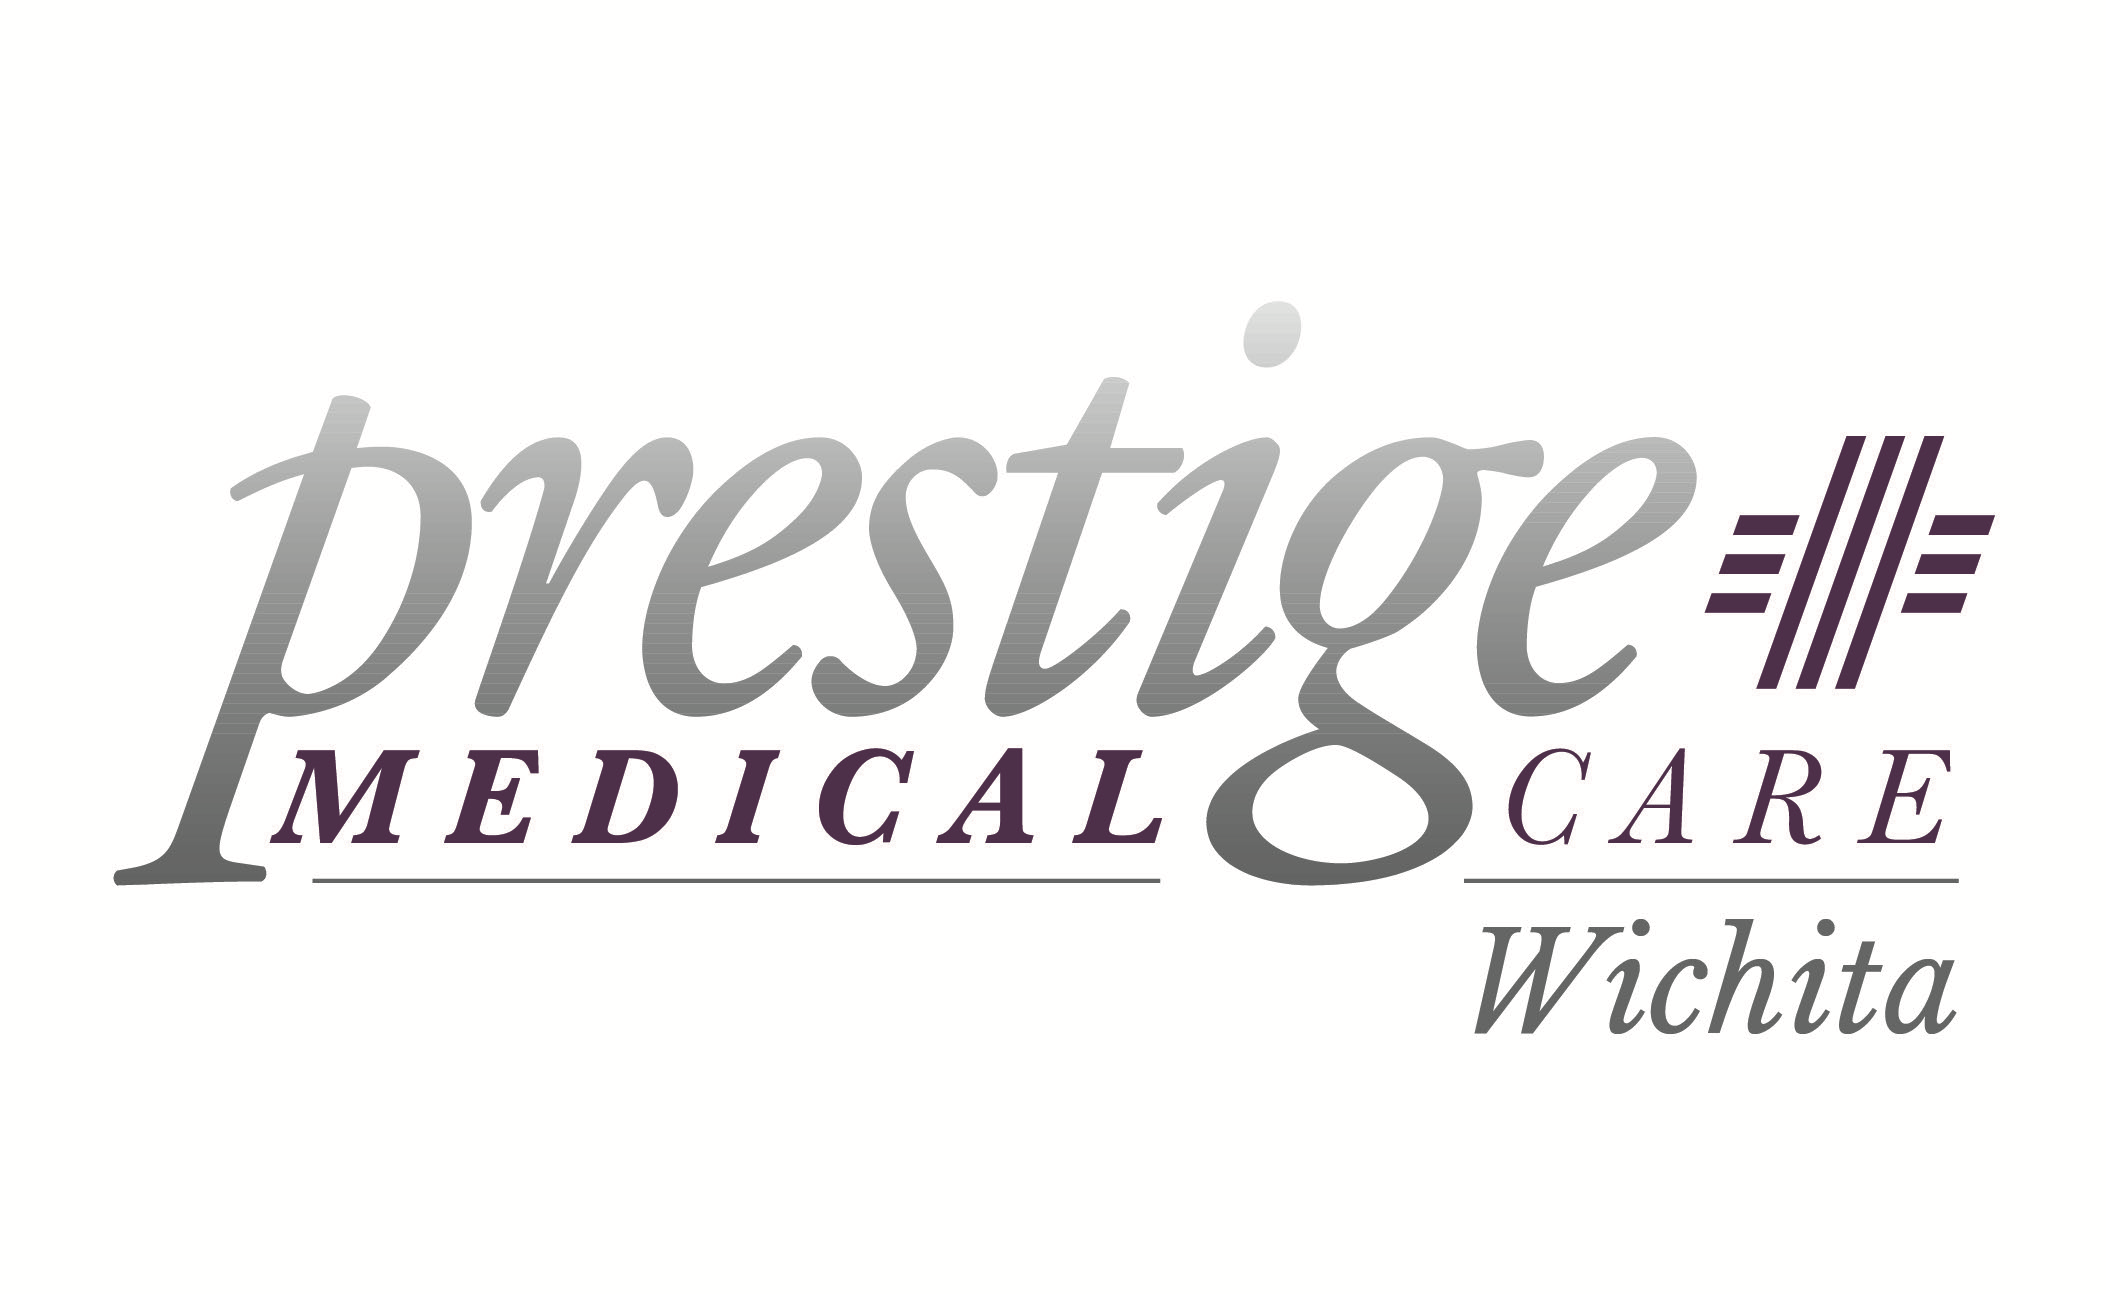 Prestige Medical Care - Wichita Logo